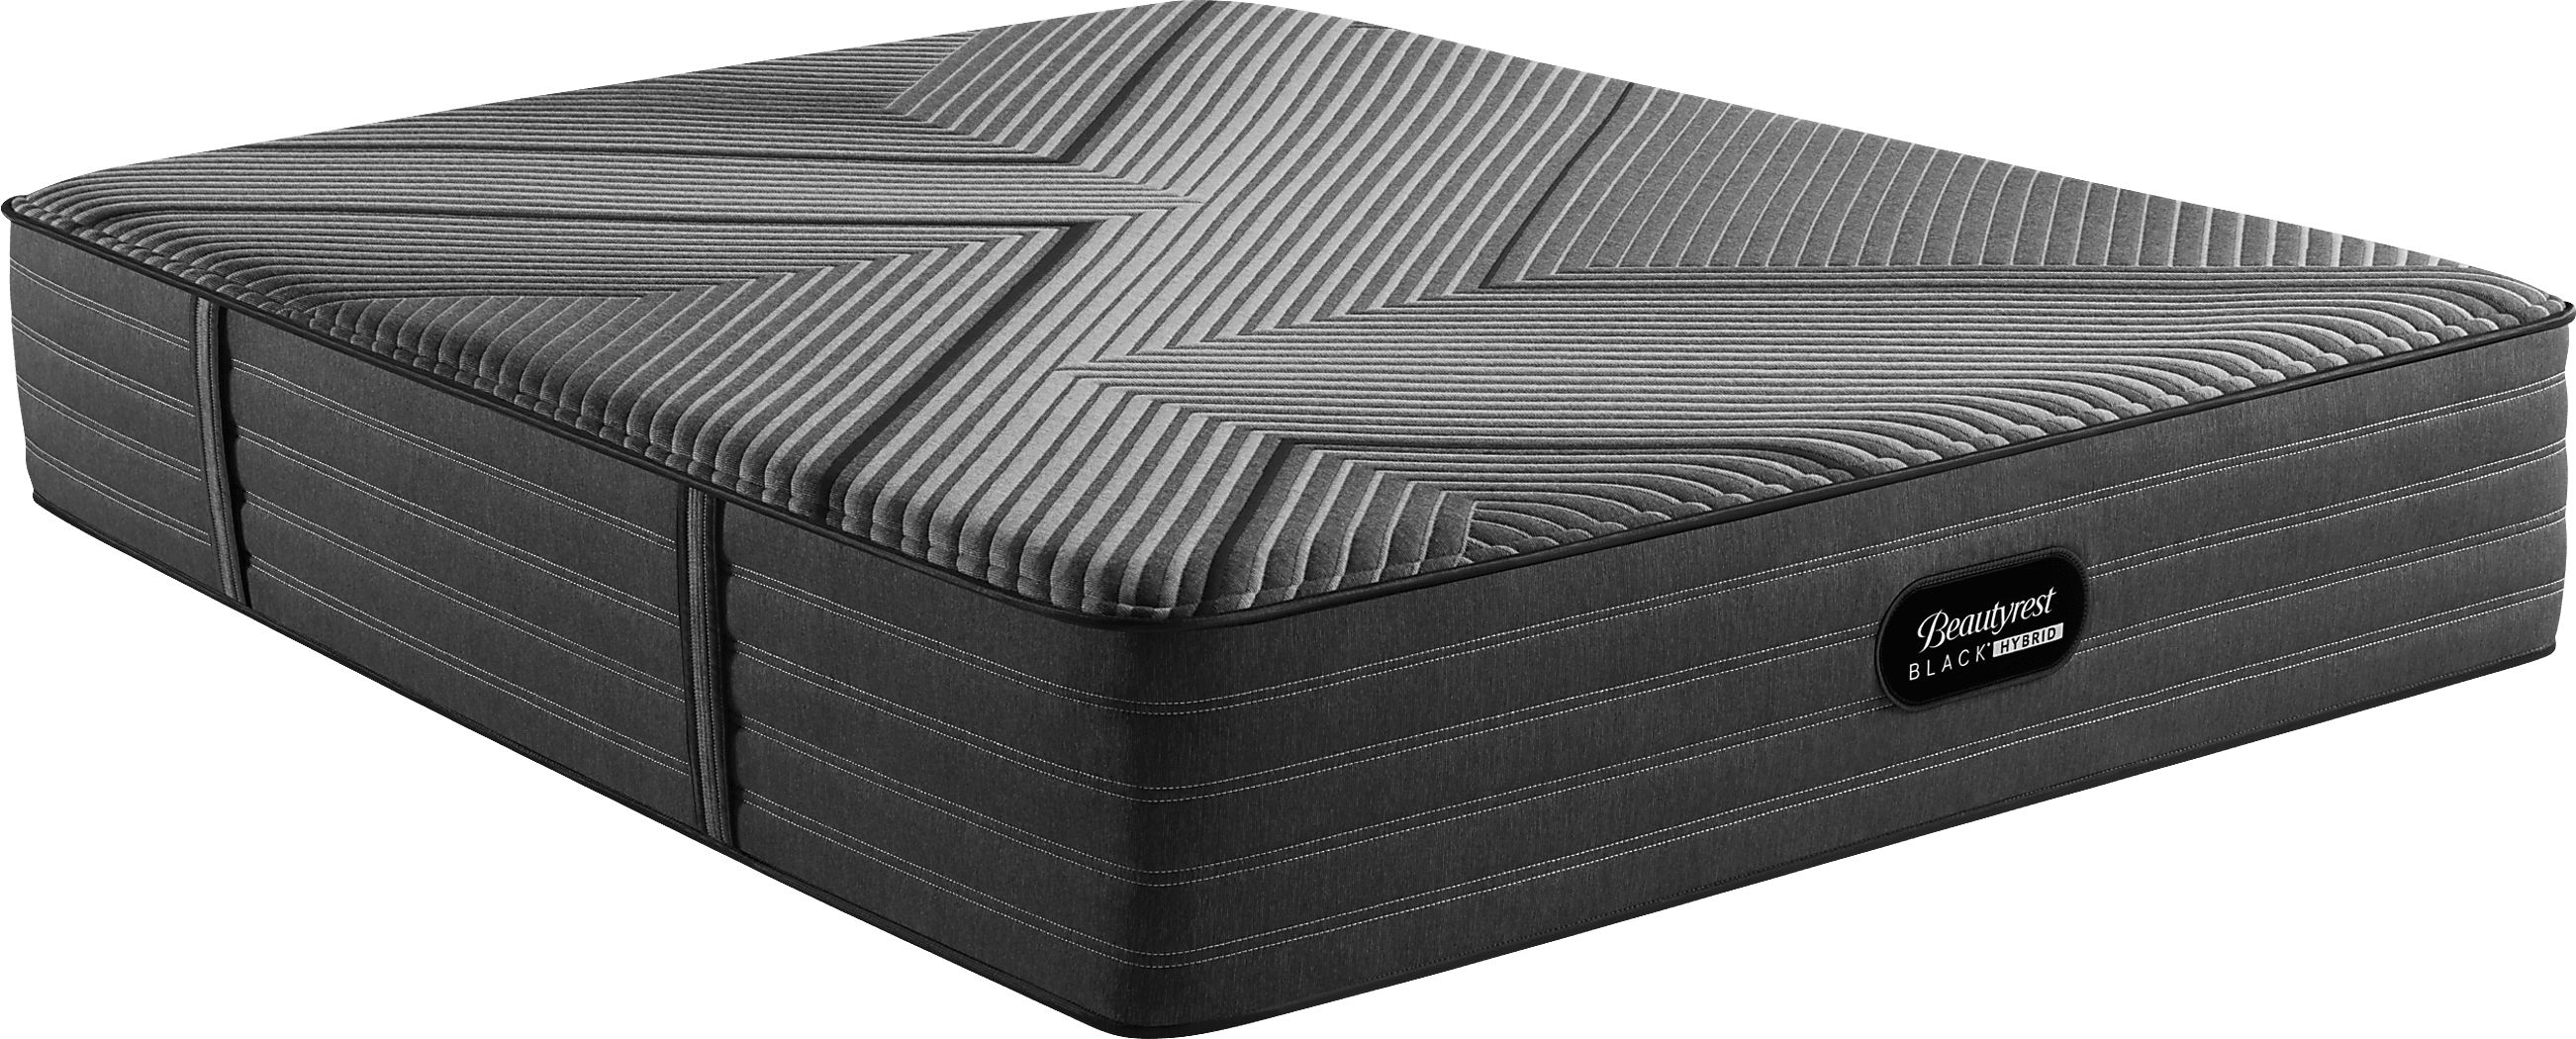 beautyrest amelia island plush tight top mattress